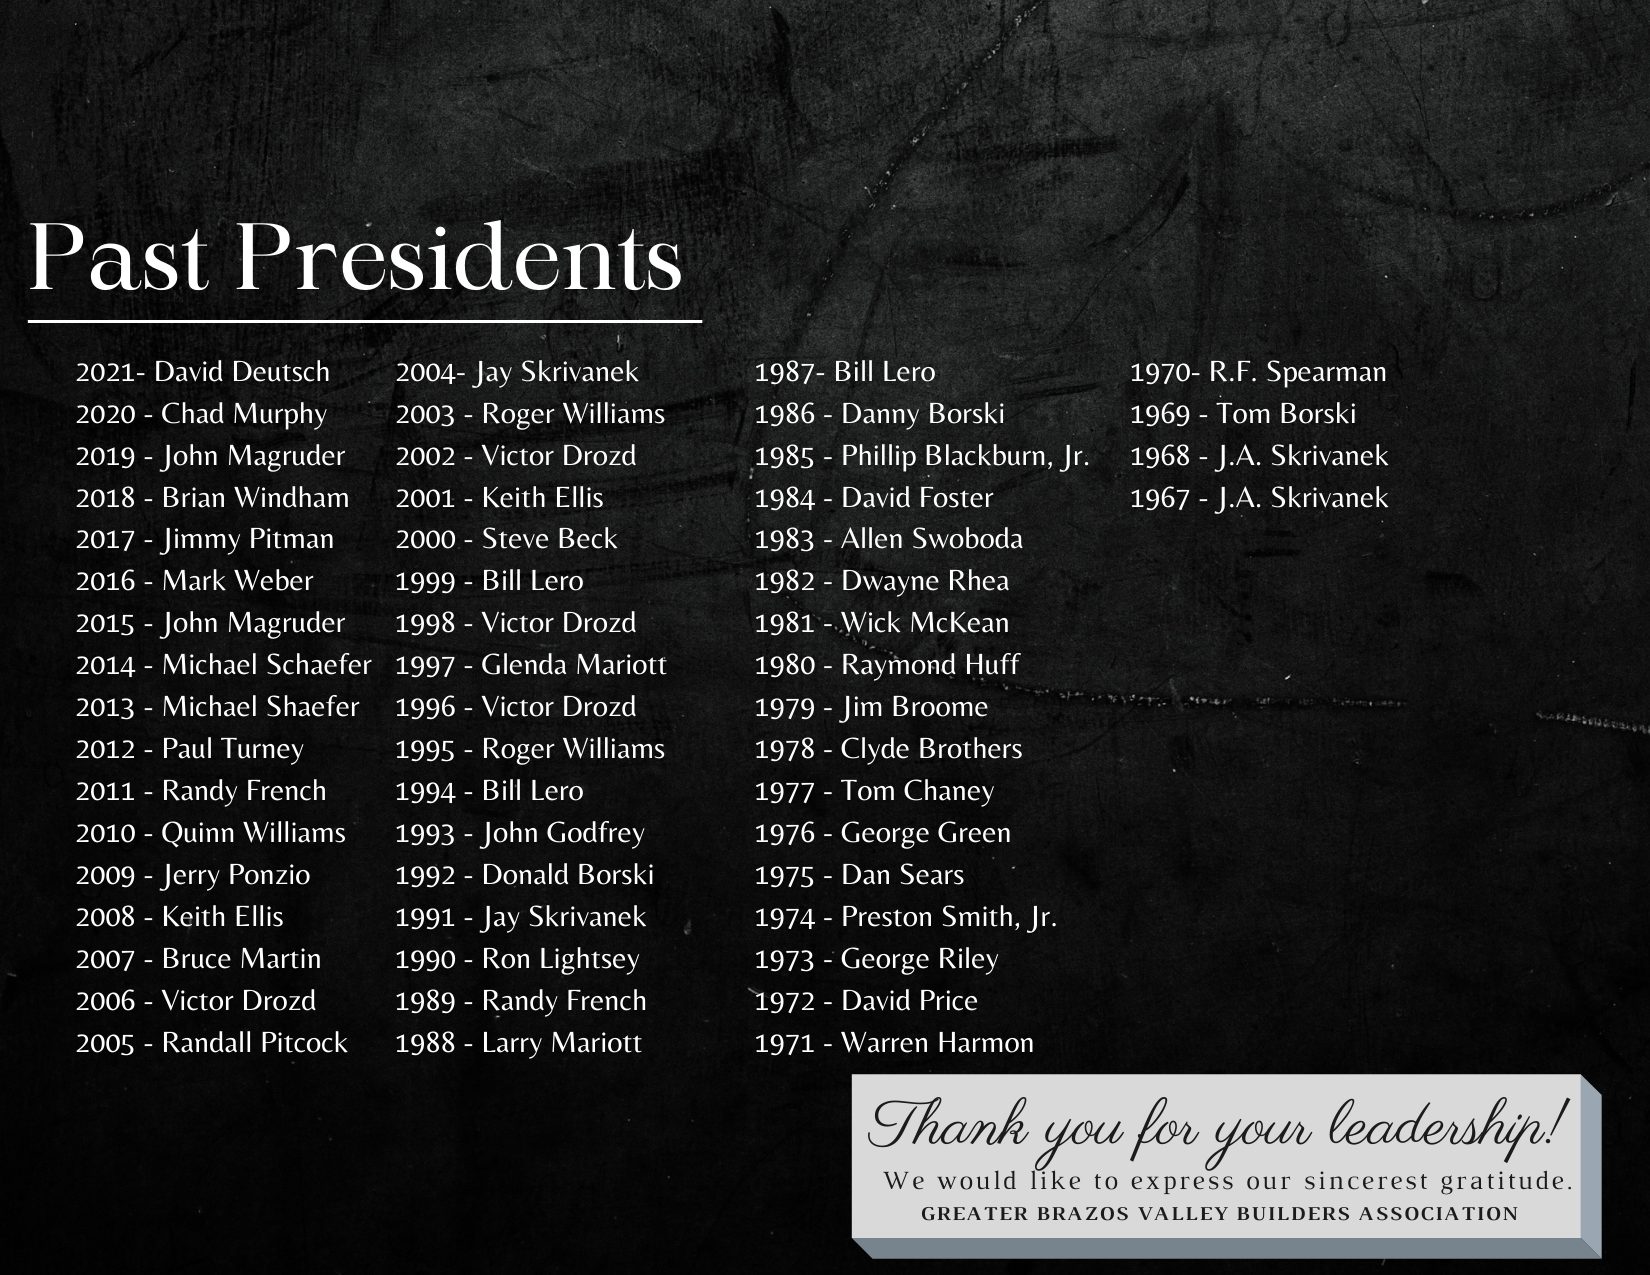 Past Presidents (2)